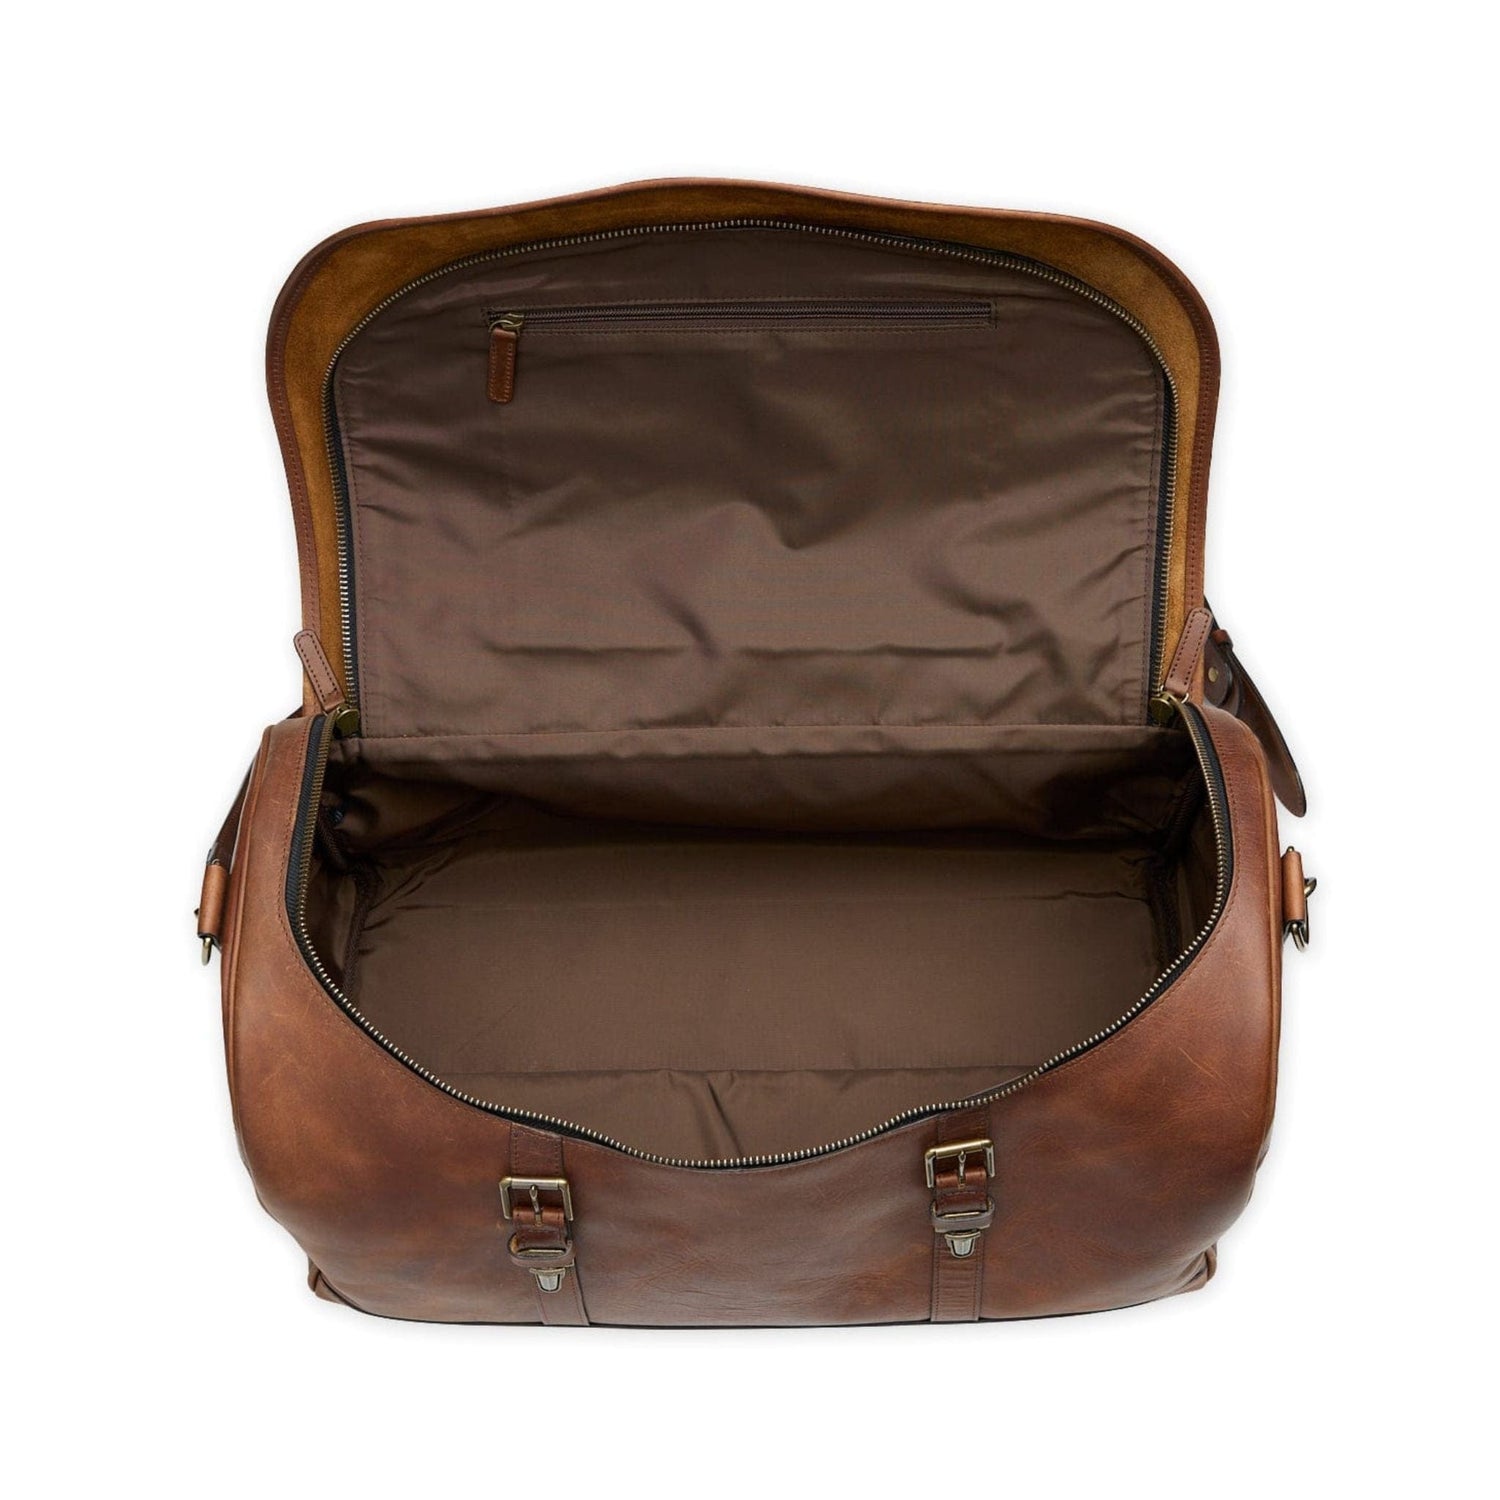 Cognac Brown Matte Leather Duffel Bag - Tender Is the Night 